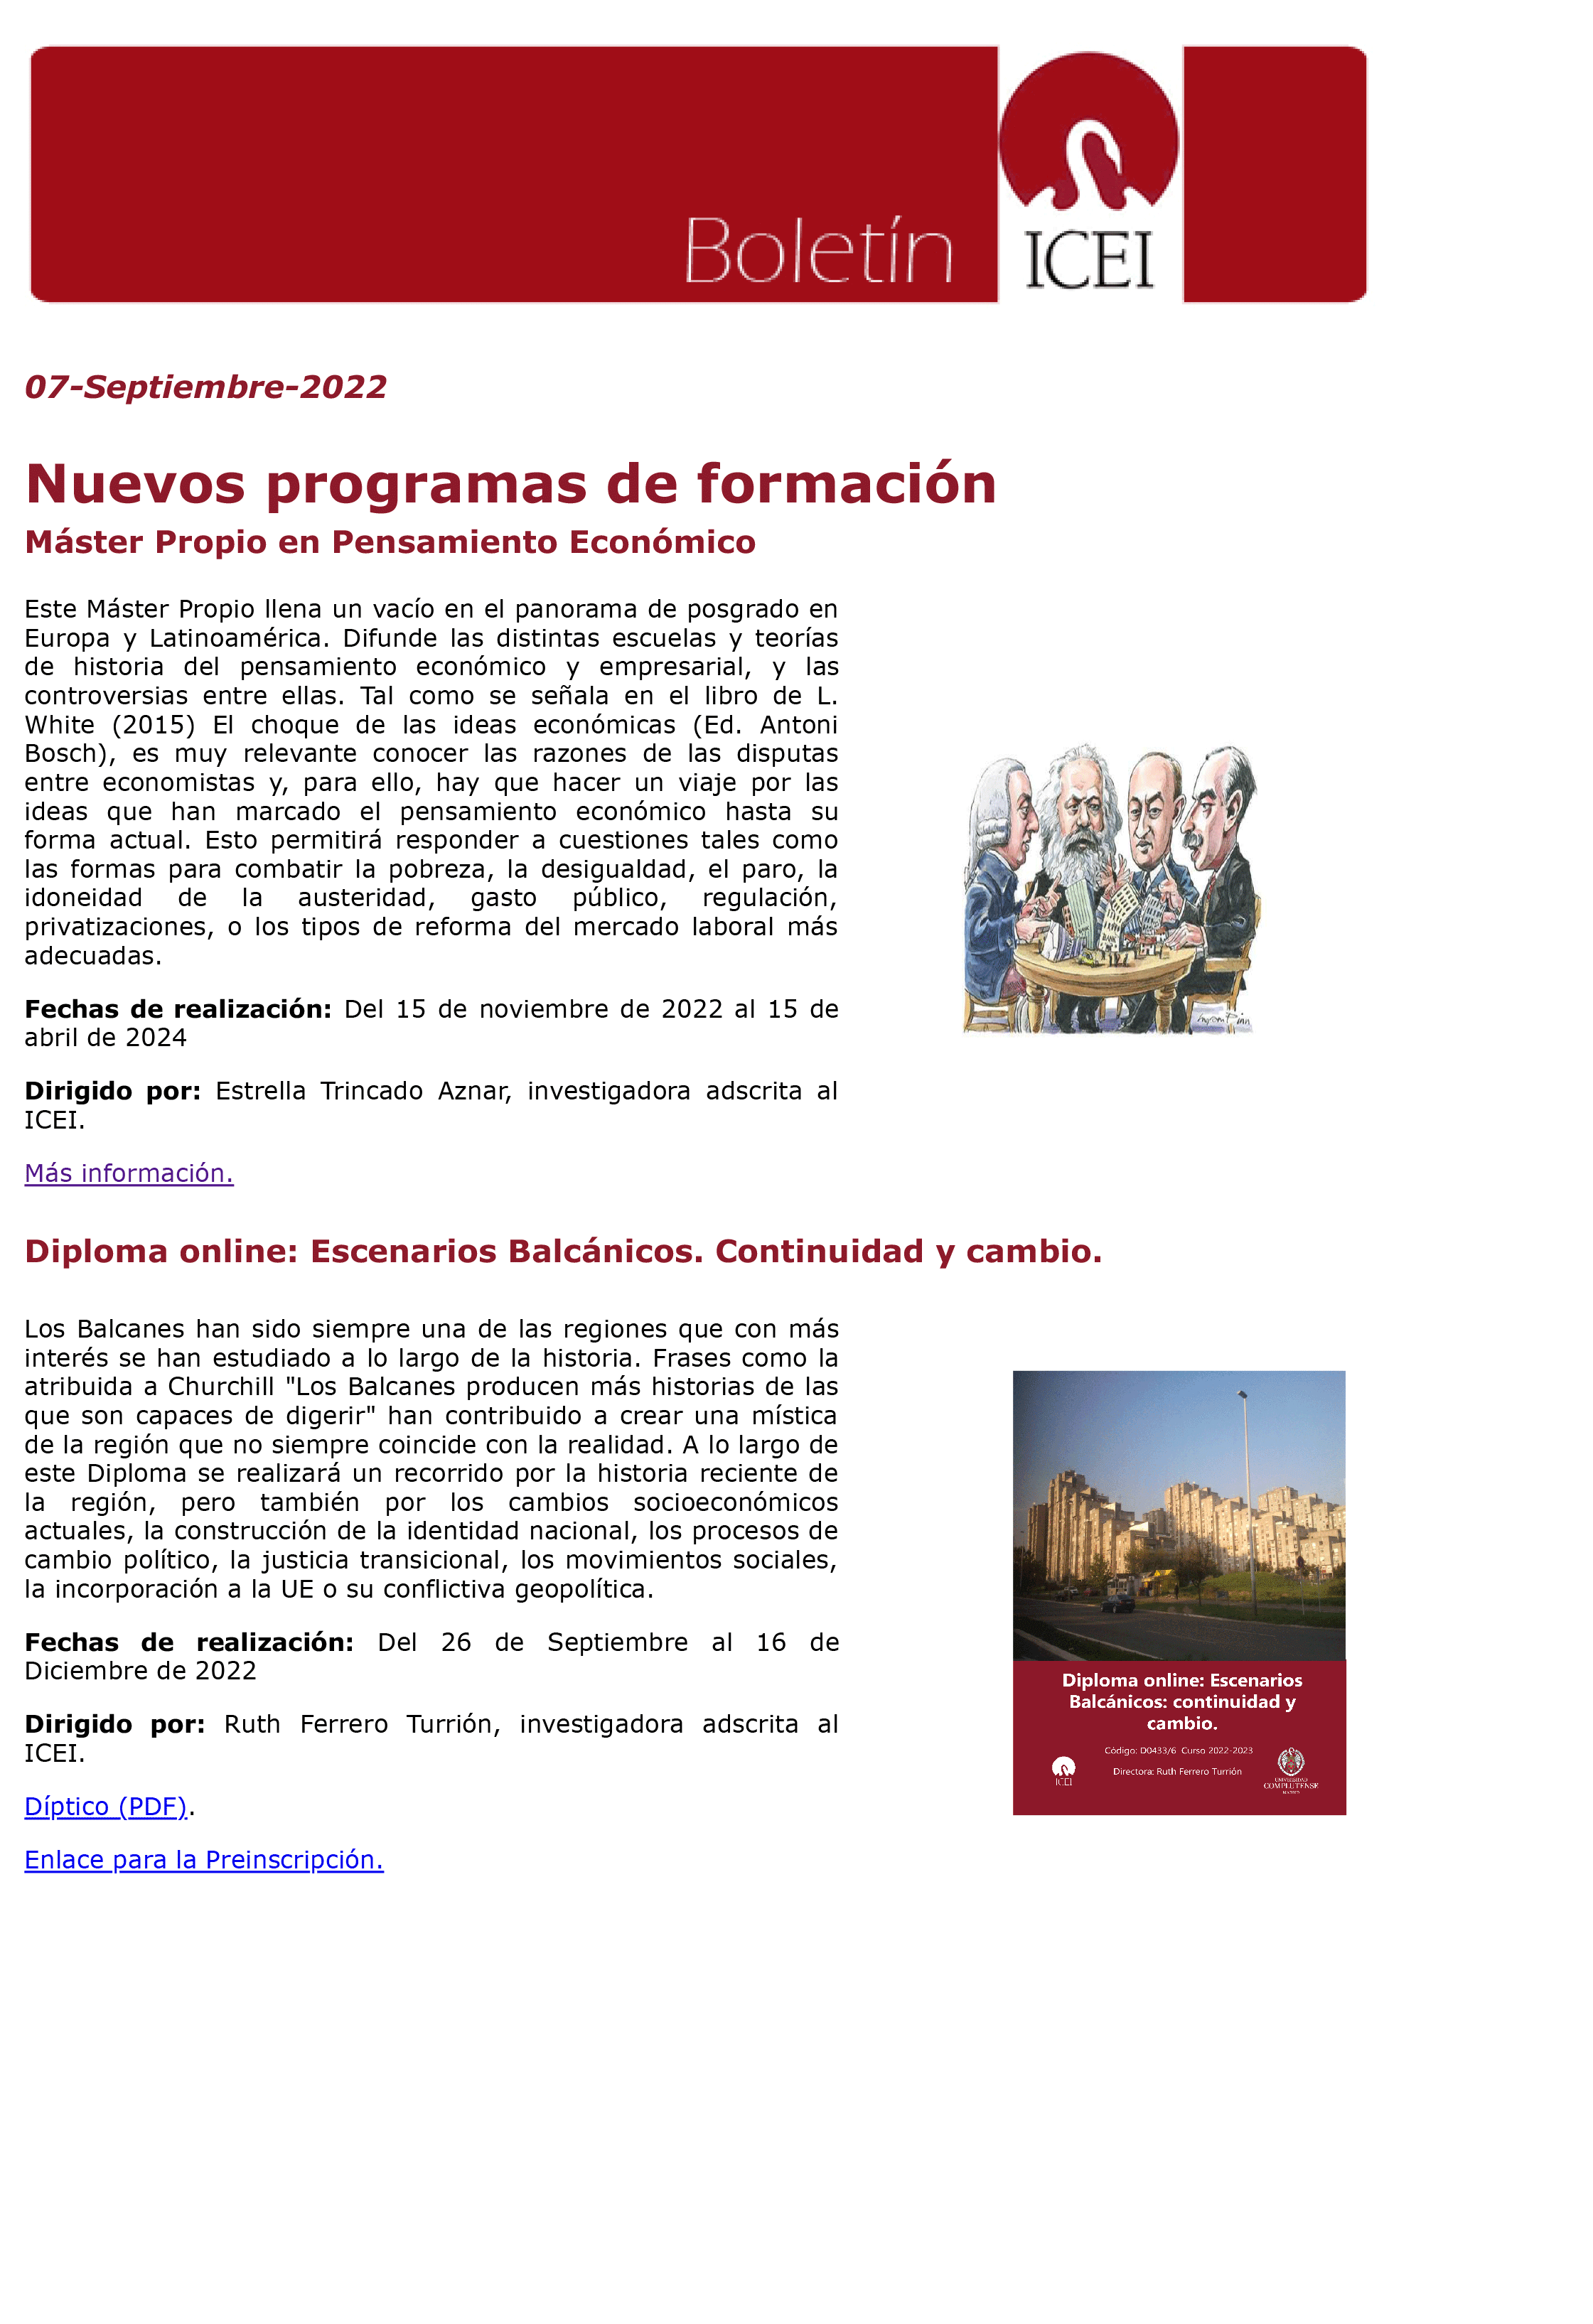 https://www.ucm.es/icei//file/07-09-22-1?ver